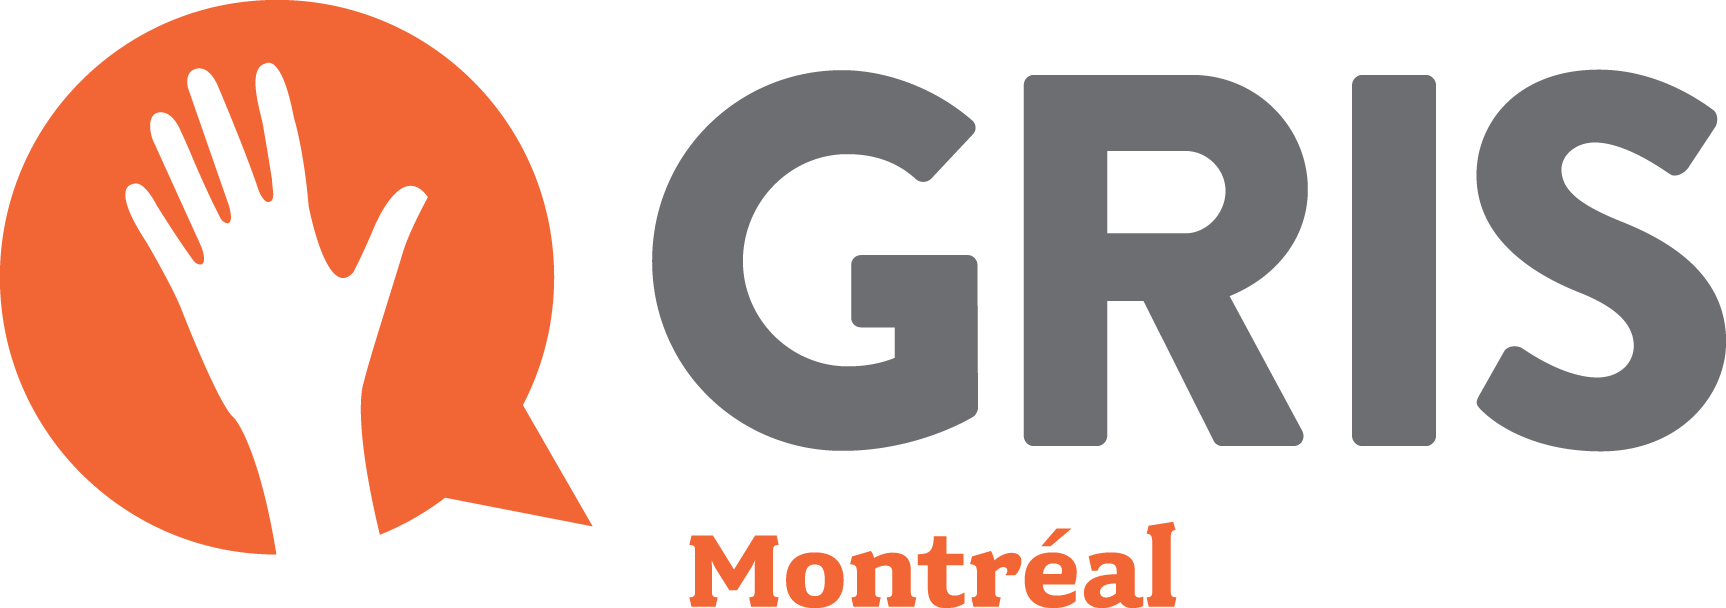 GRIS logo